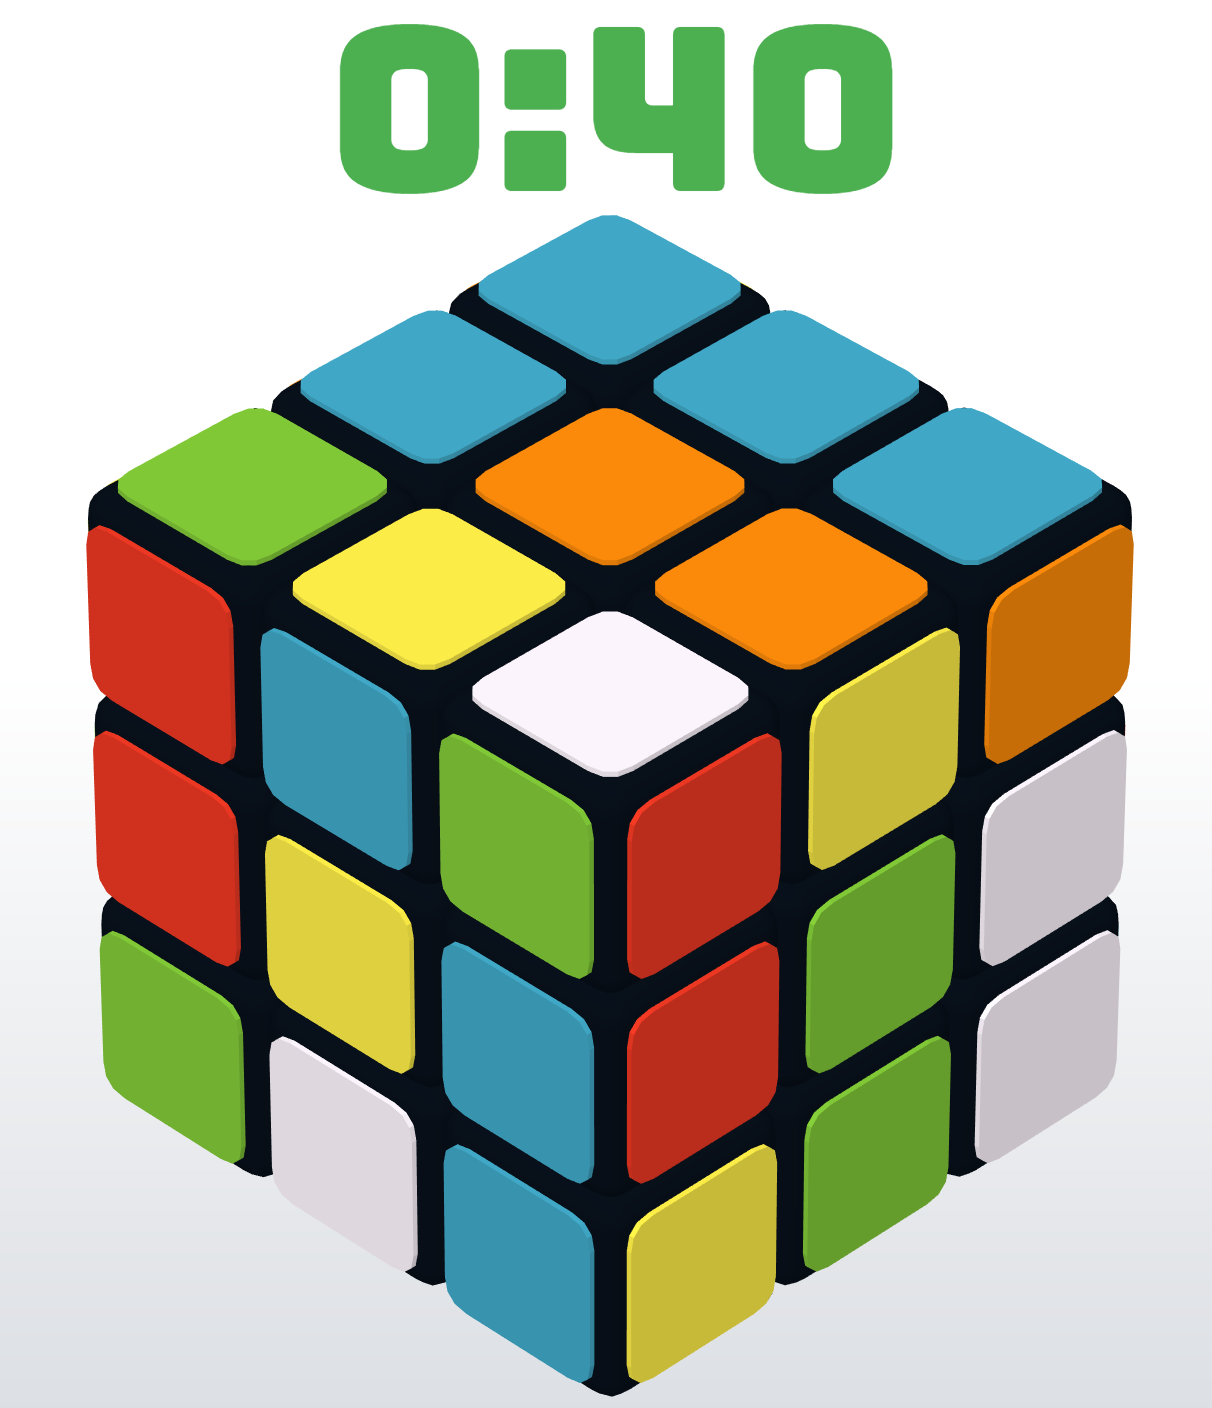 3D Rubiks Cube Game.